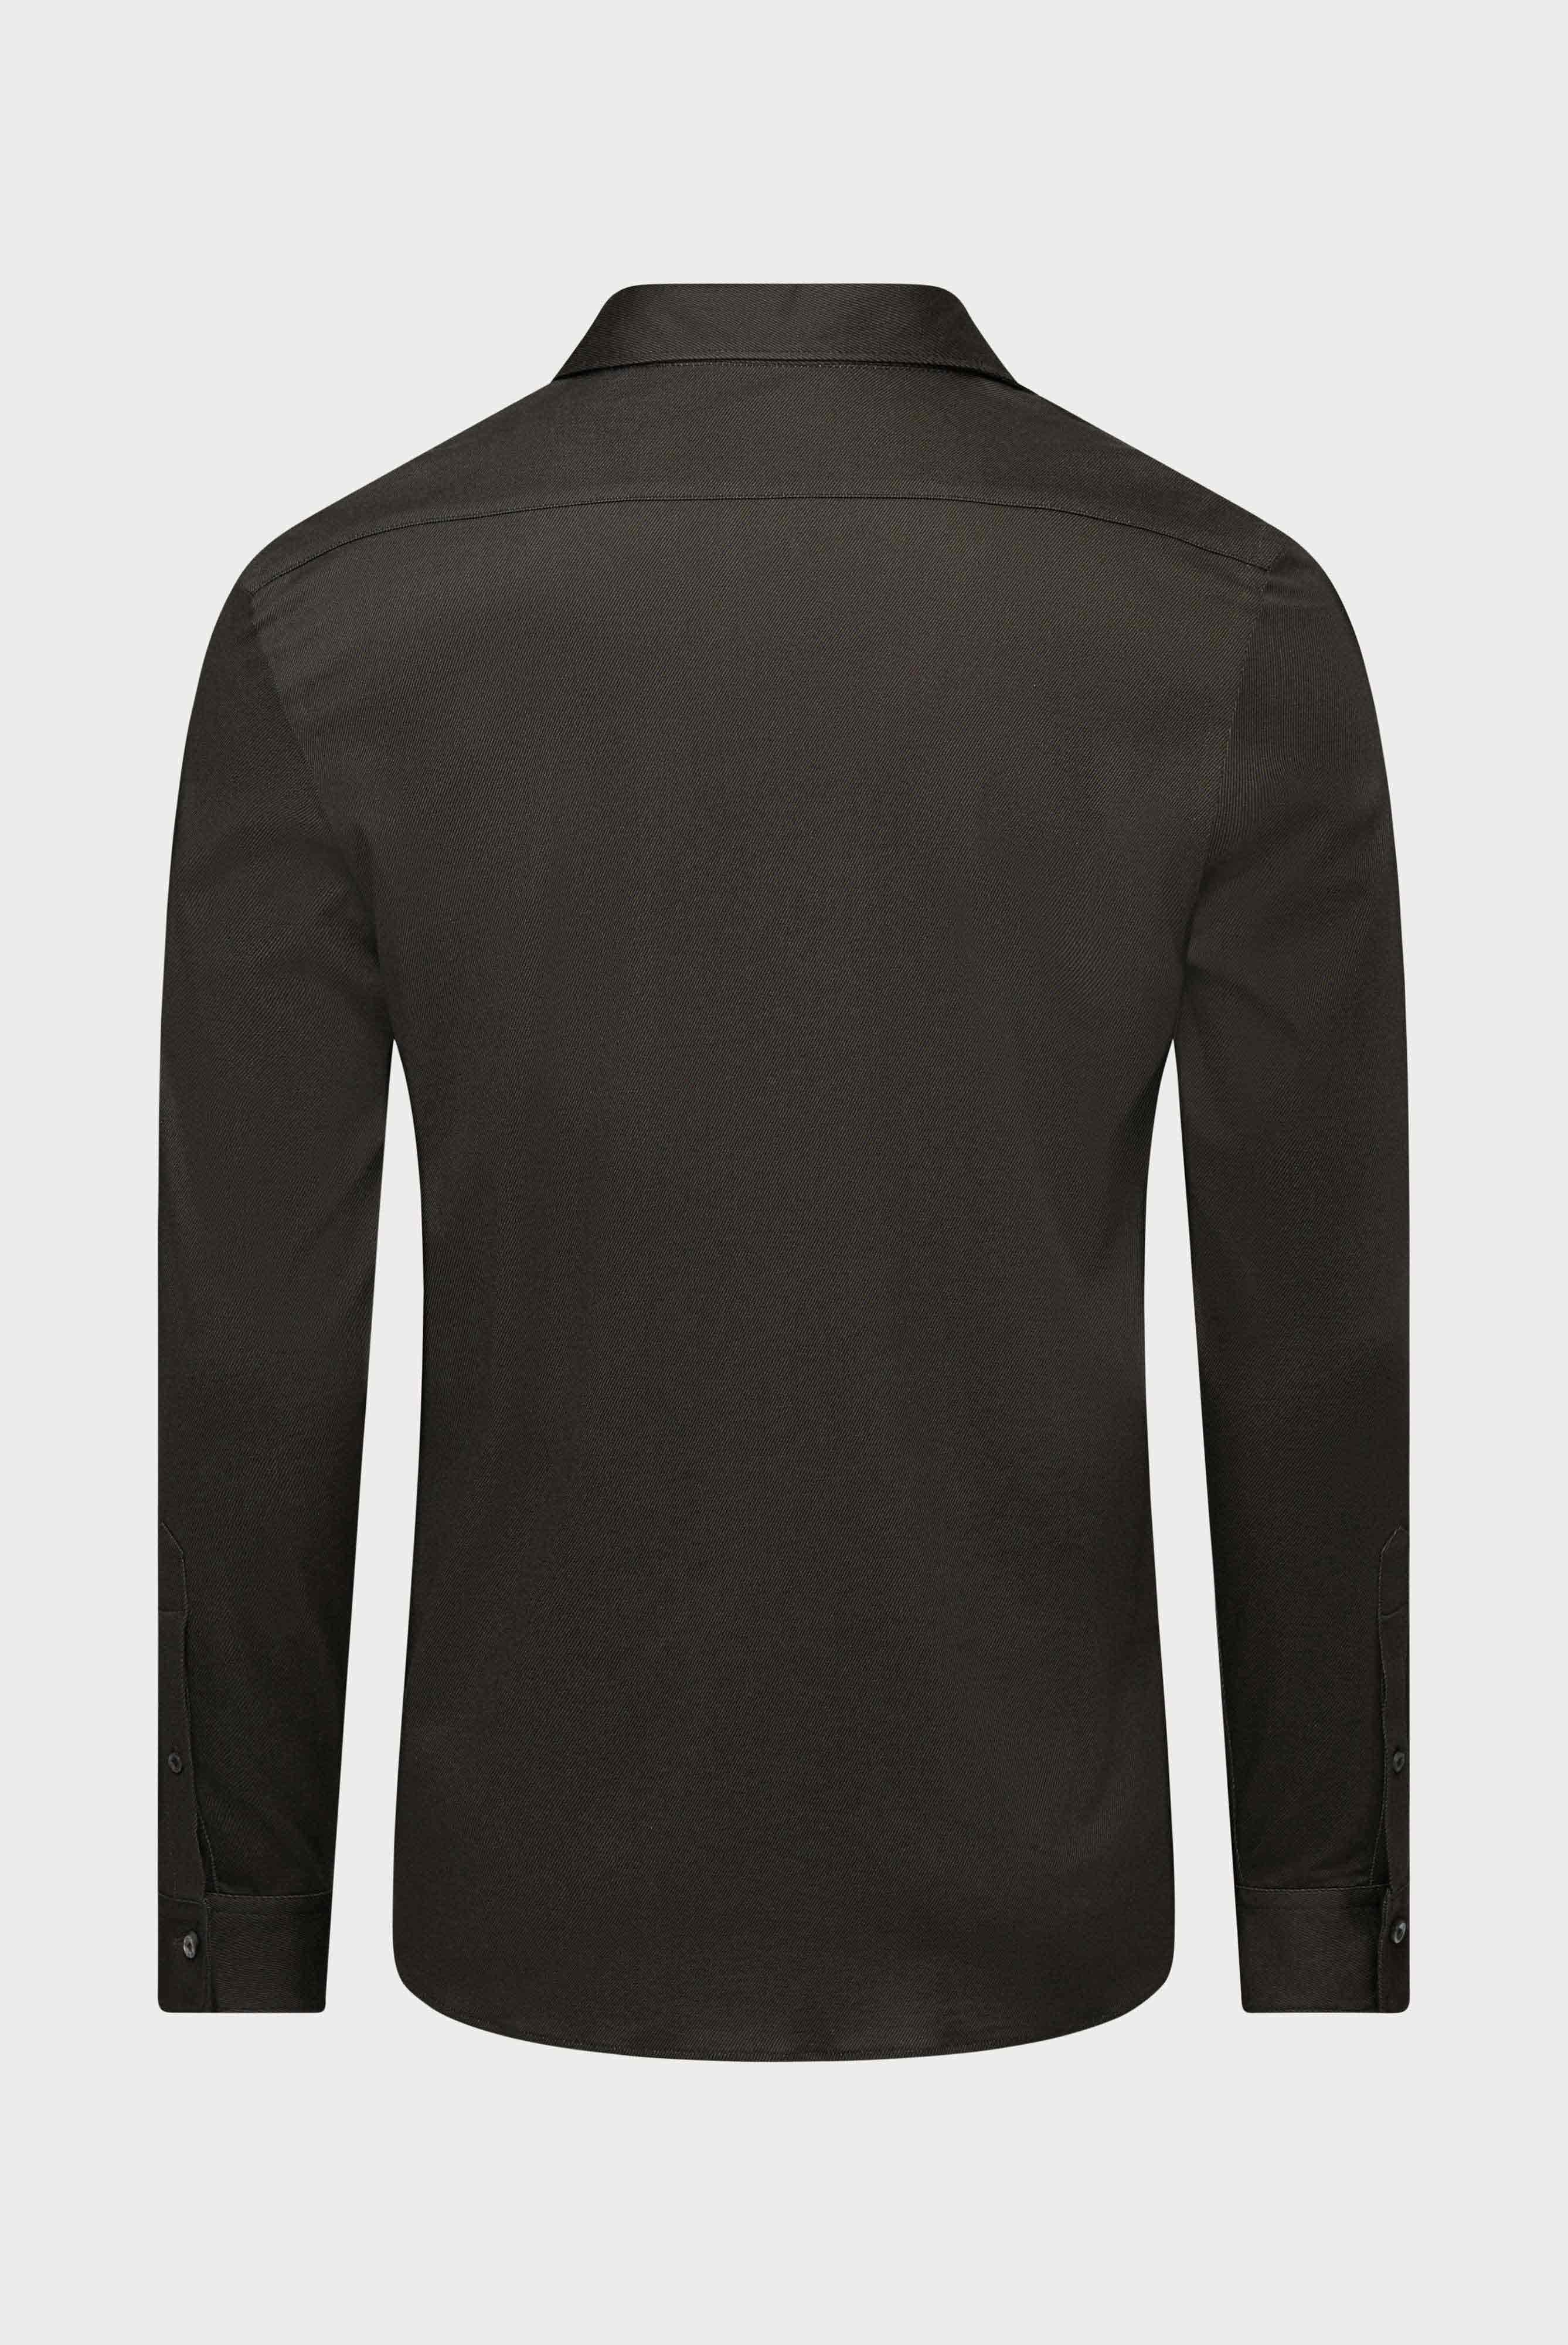 Casual Hemden+Jersey Hemd mit Twill Druck Tailor Fit+20.1683.UC.187749.970.S